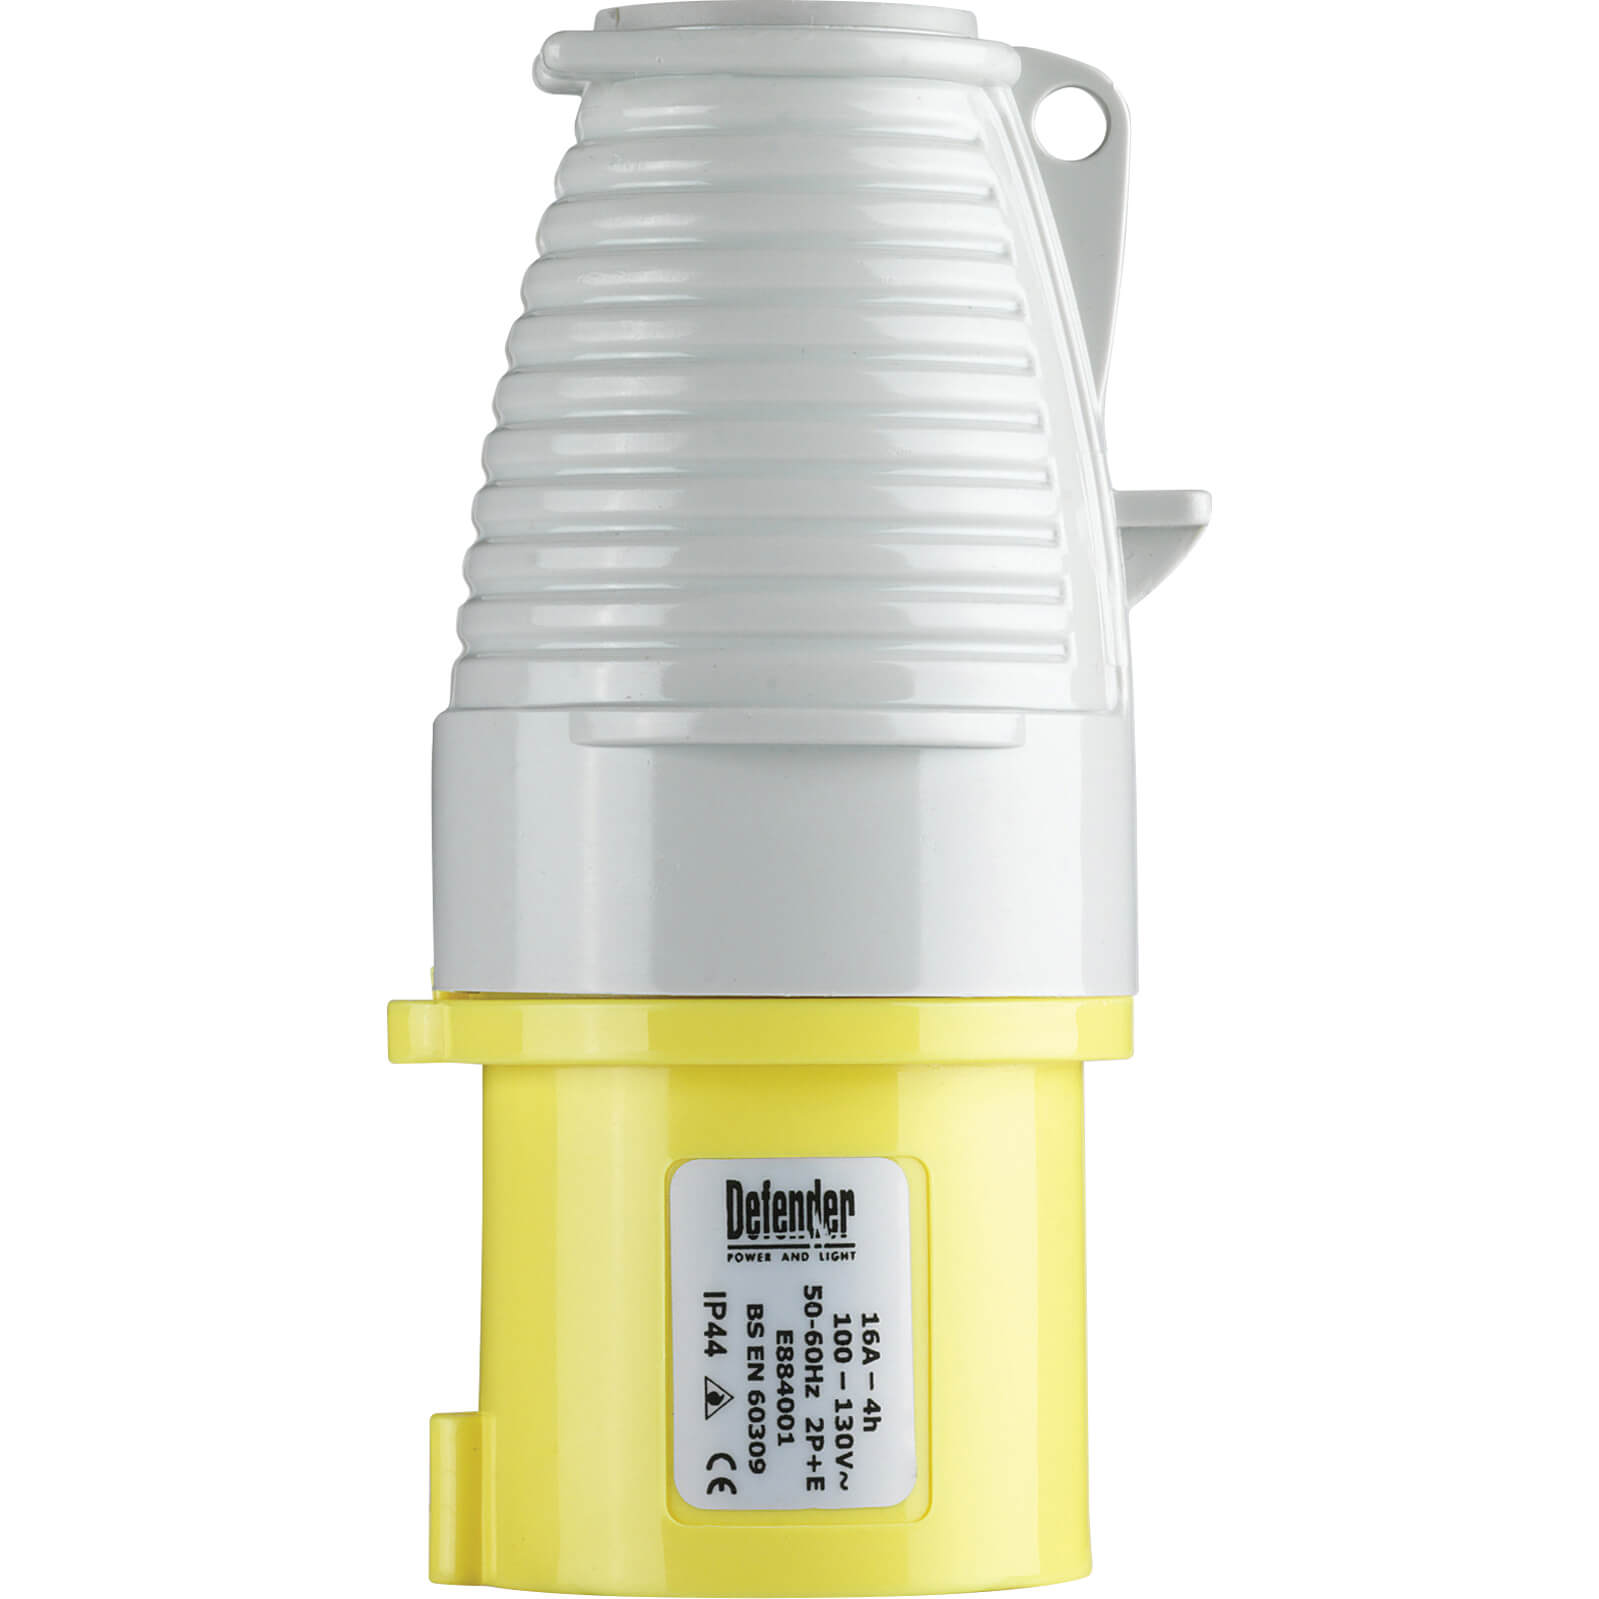 Image of Defender Yellow Plug 16 Amp 110V 110v